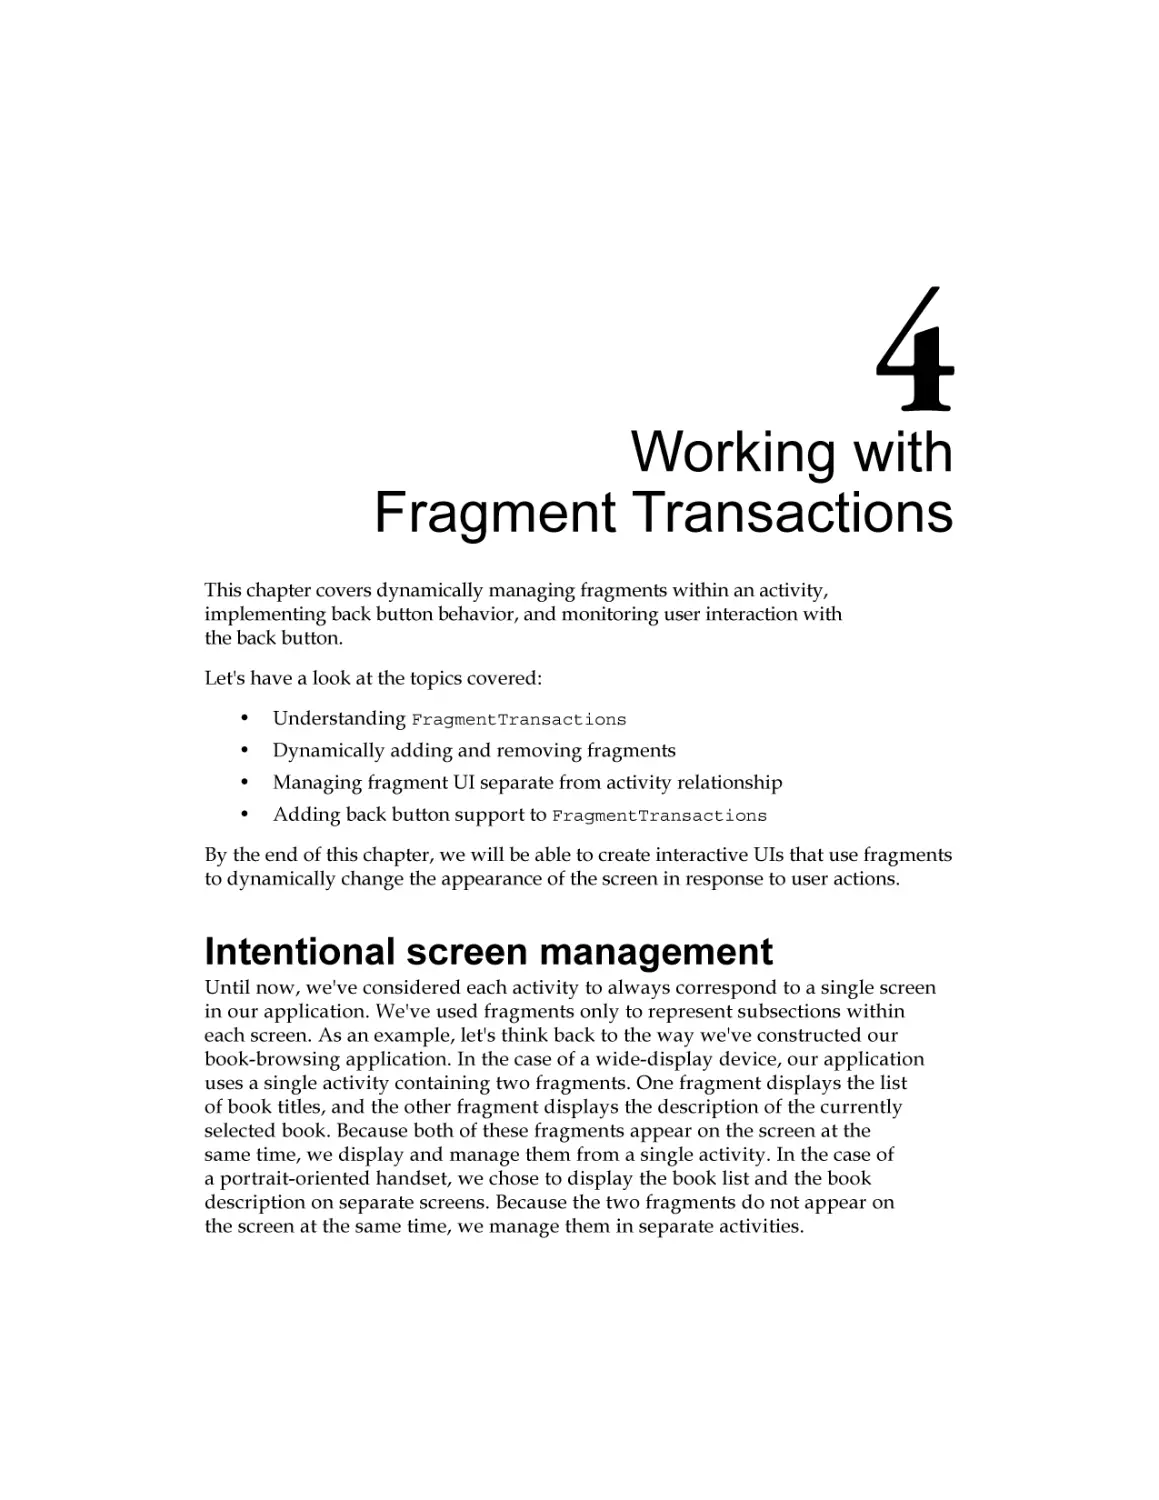 Chapter 4
Intentional screen management